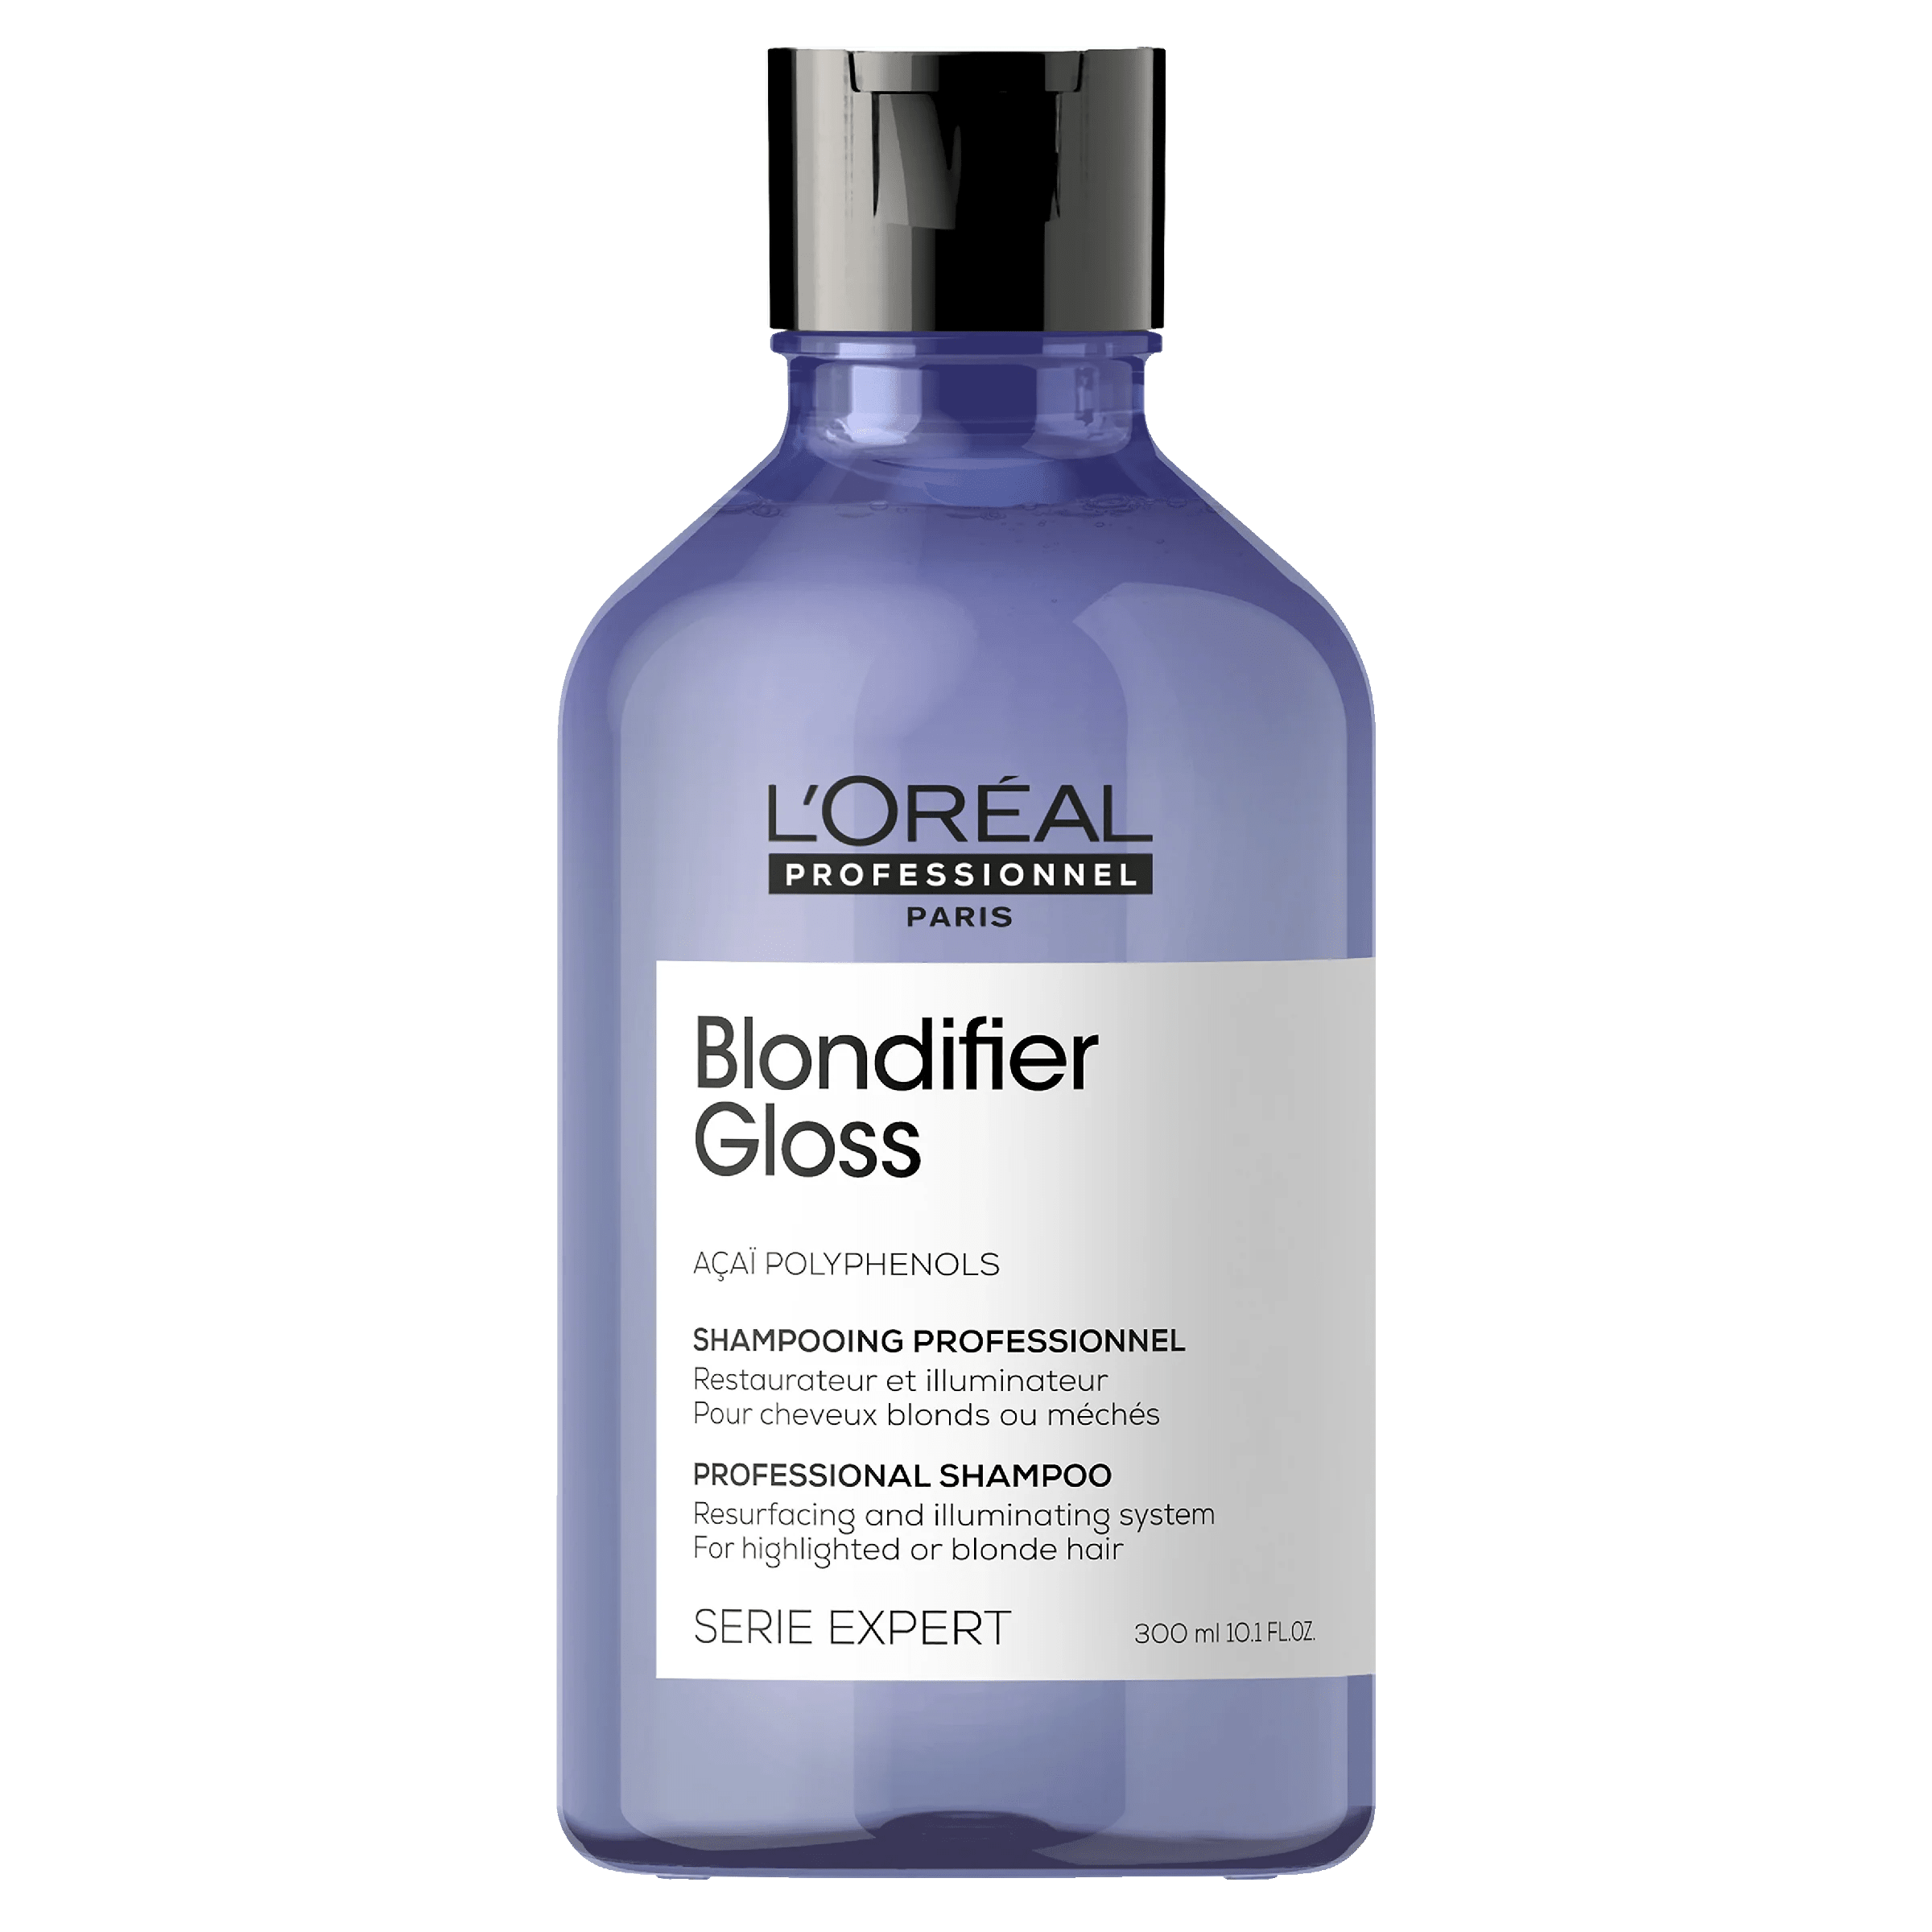 L'oreal Blondifier Gloss Shampoo 300ml